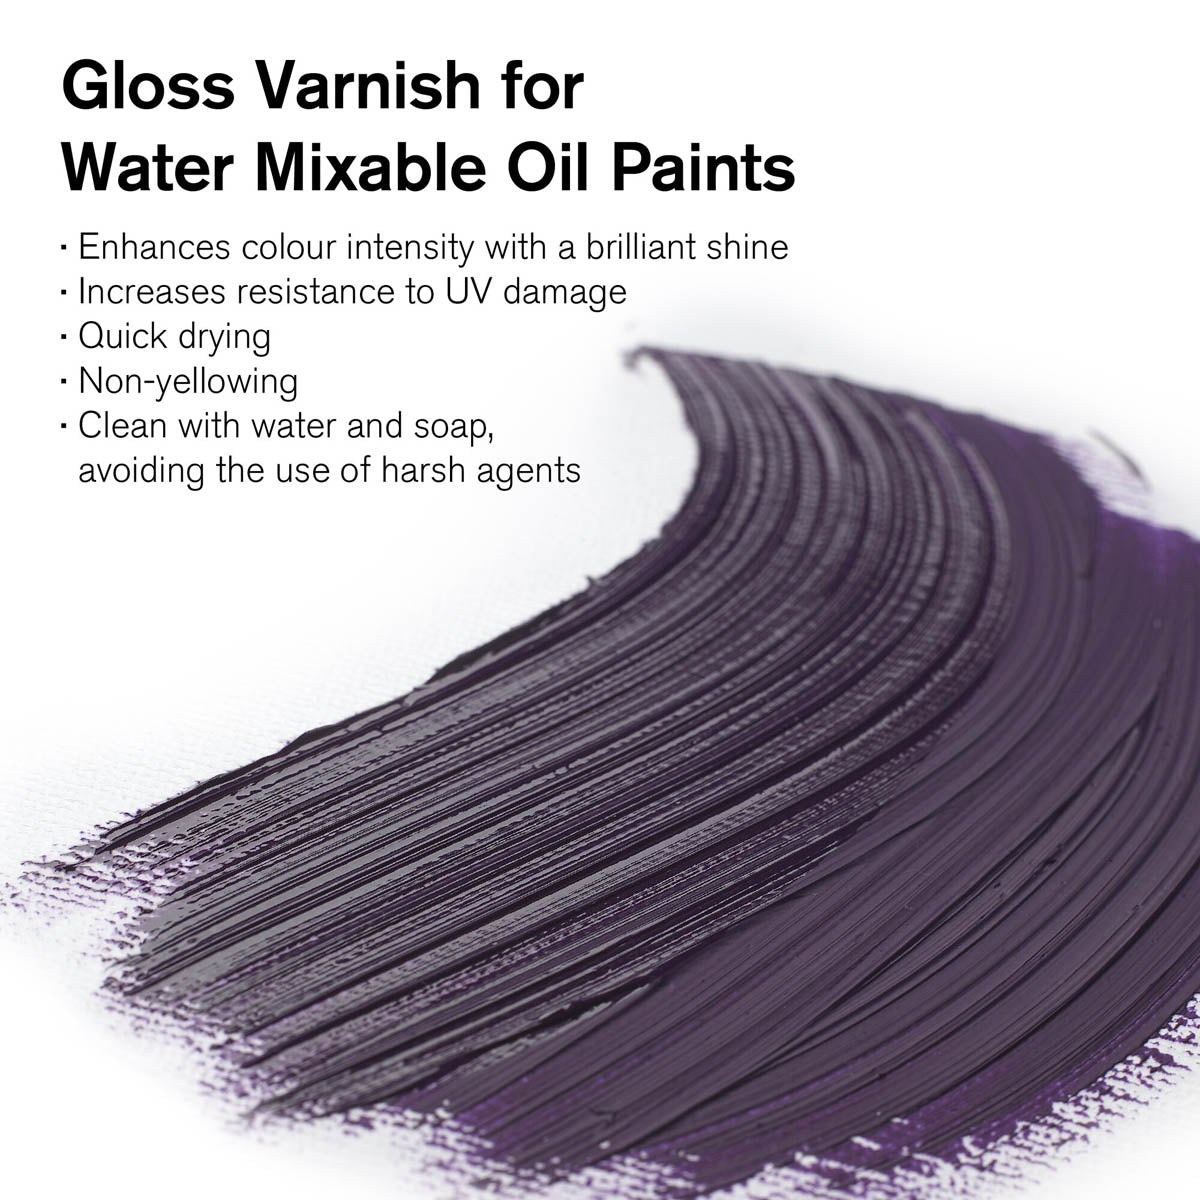 Winsor and Newton - Water Mixable Gloss Varnish - 75ml -